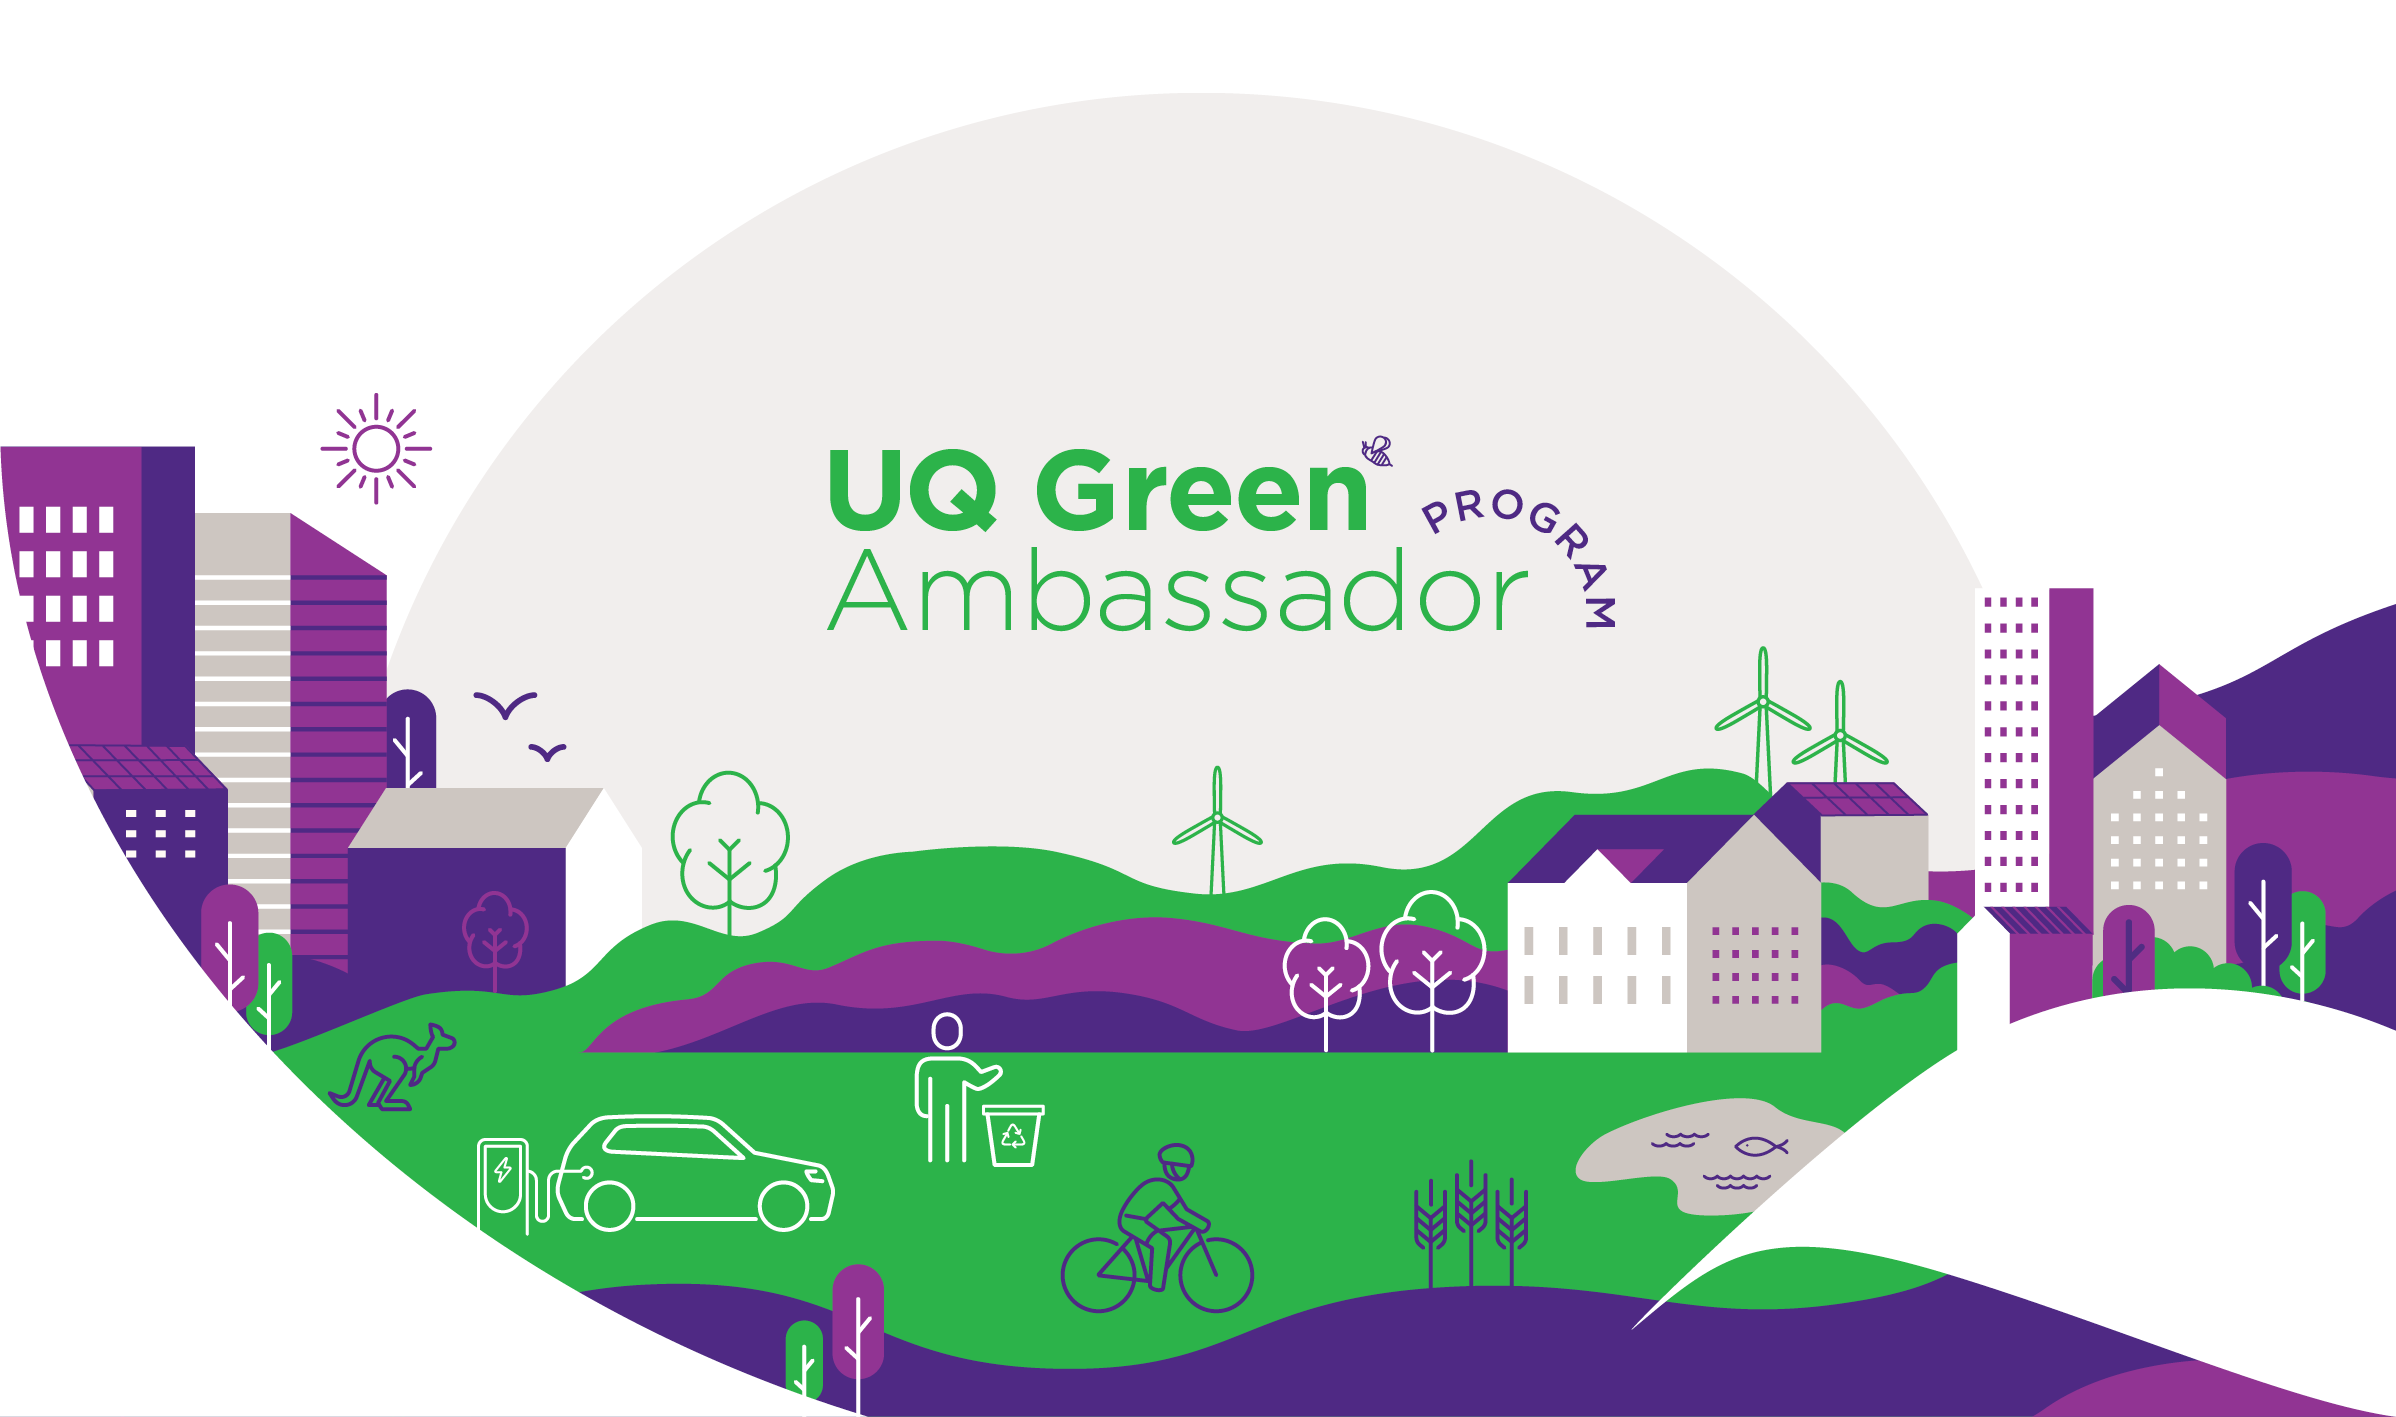 The official banner of the UQ Green Ambassador Program